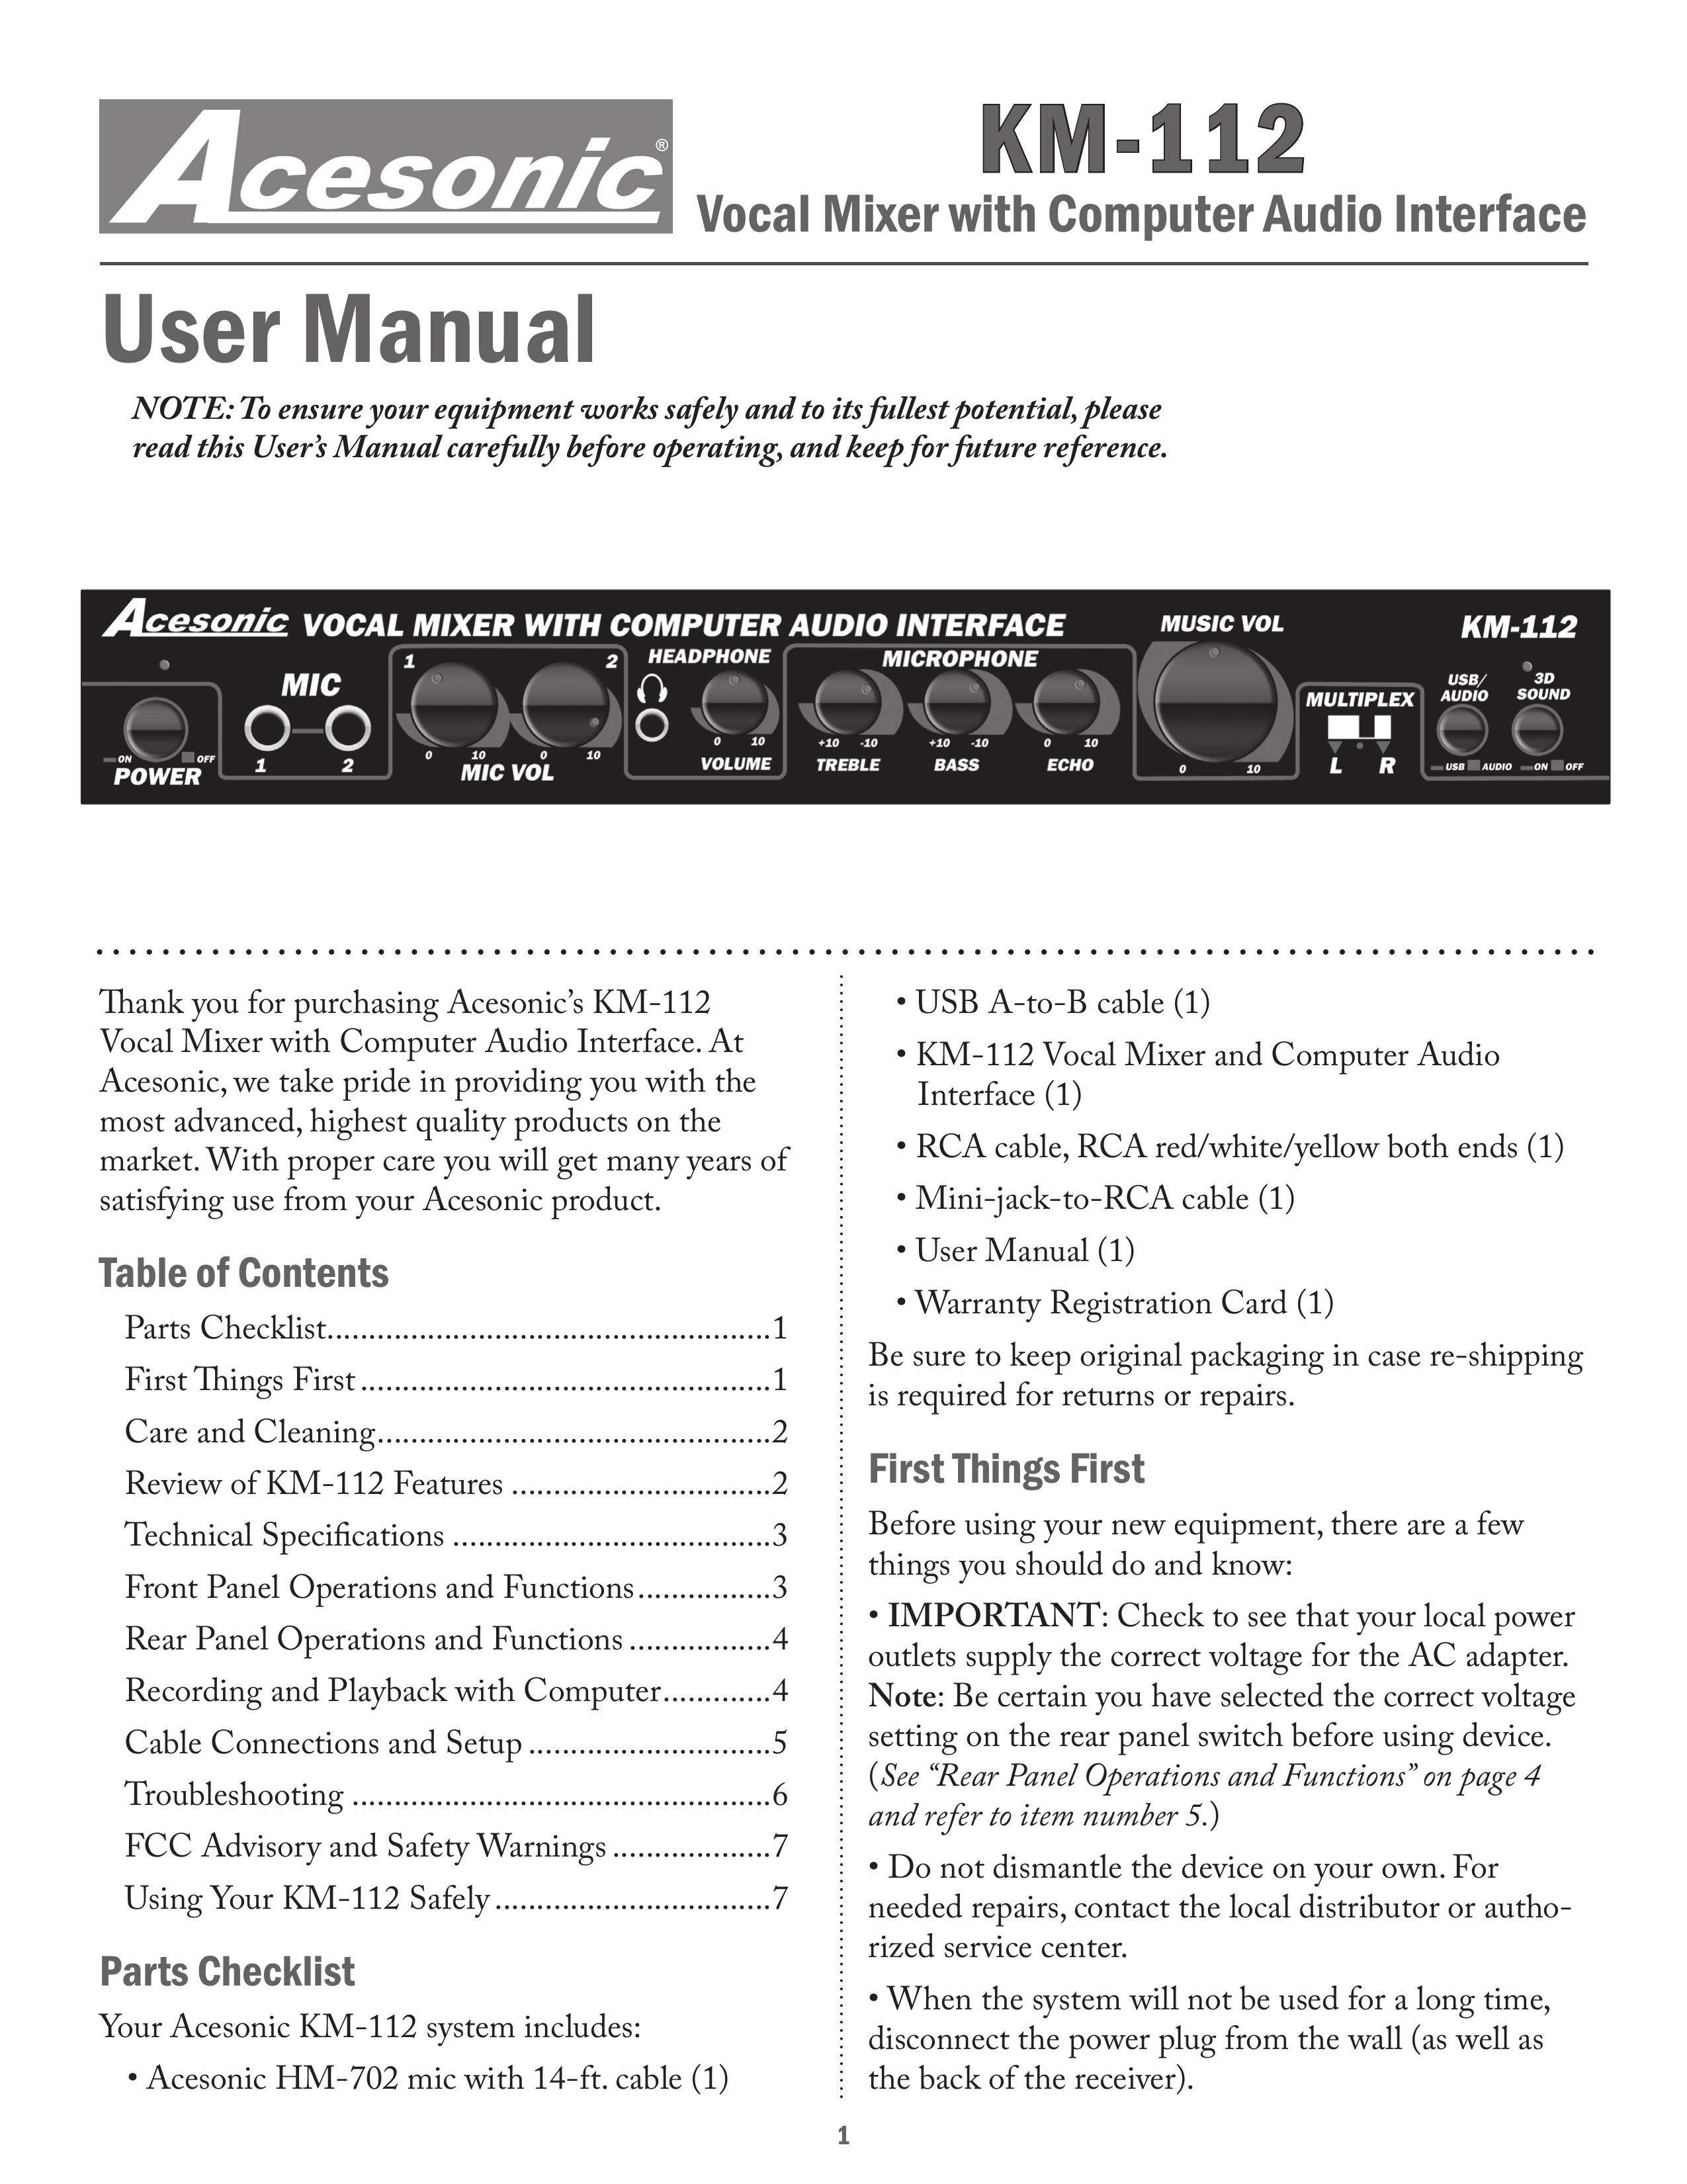 Acesonic KM-112 Music Mixer User Manual